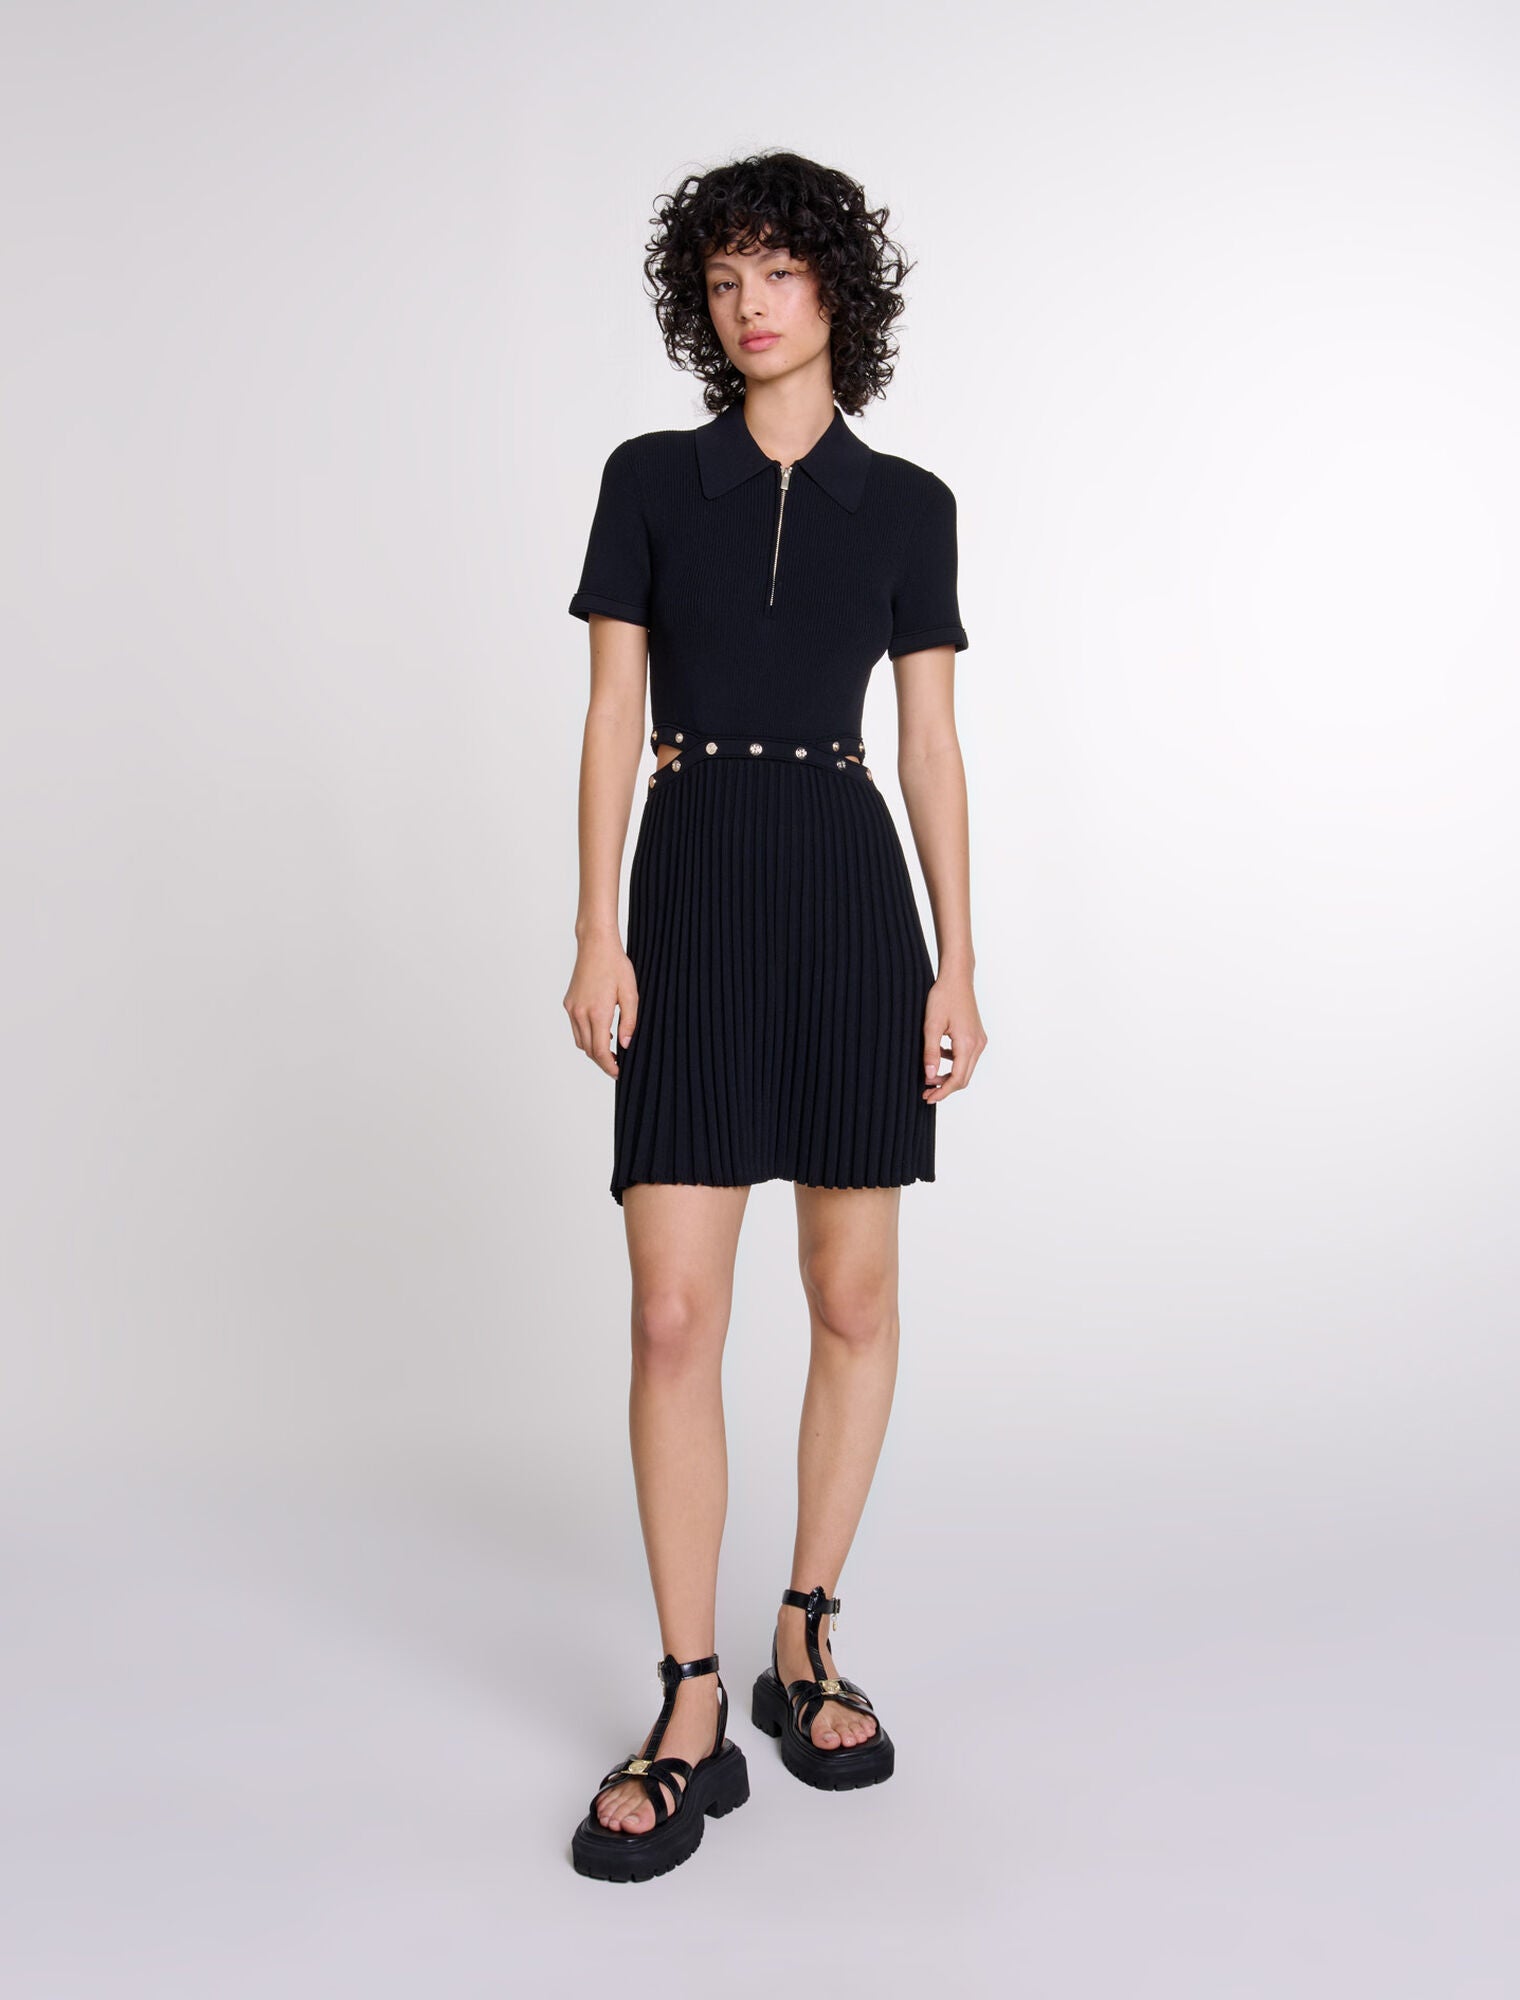 Black featured Short knit dress